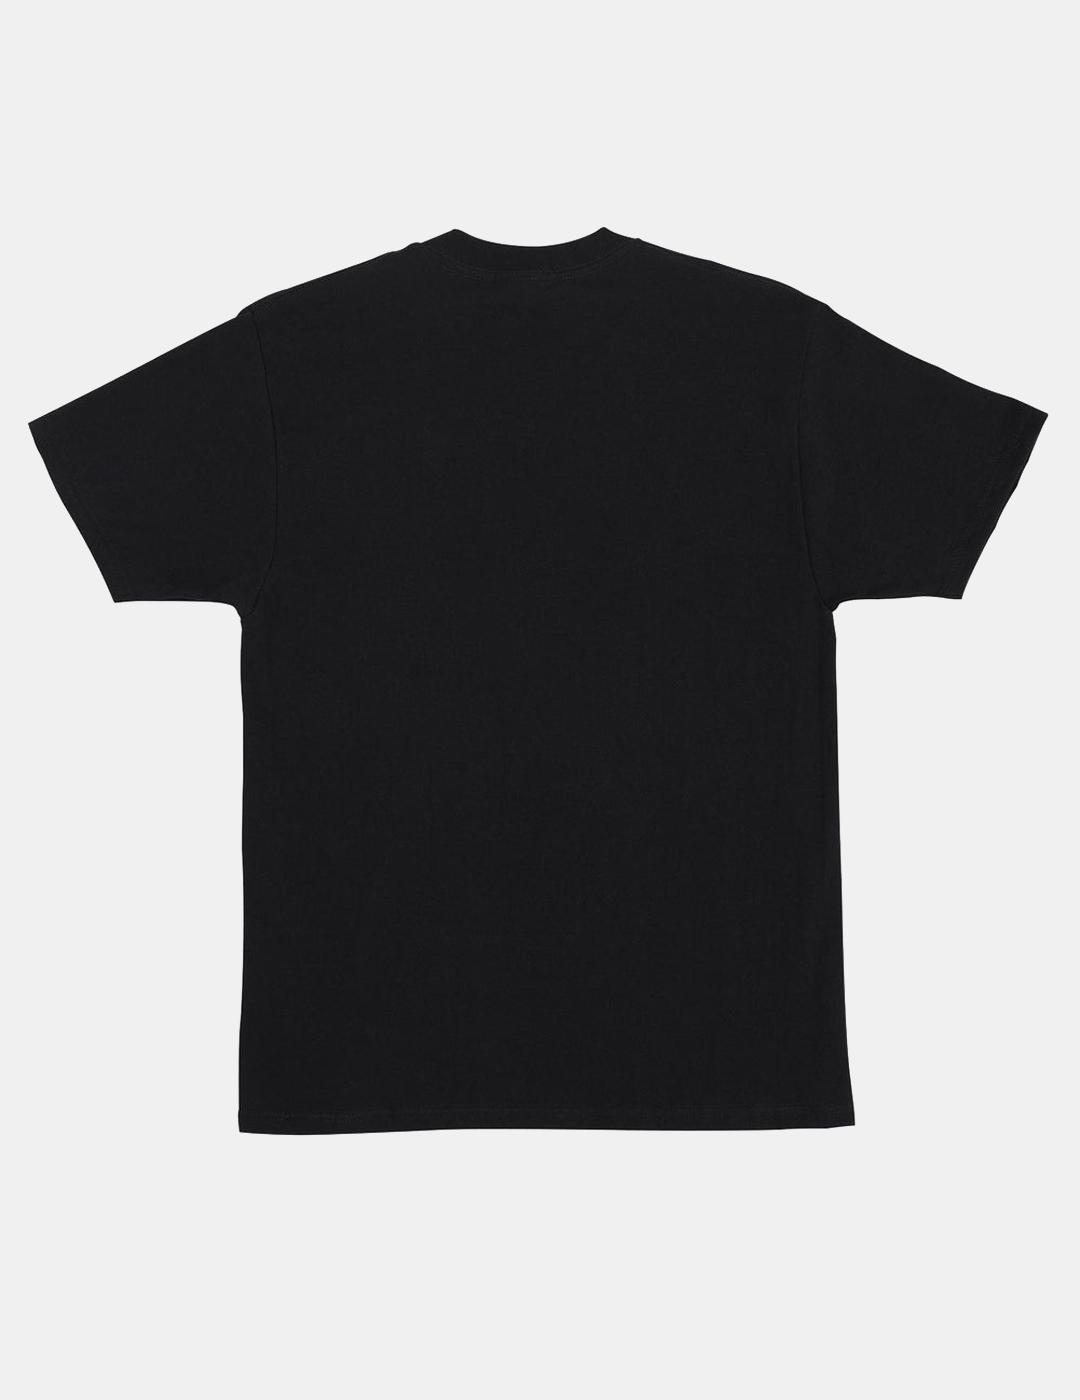 Camiseta SANTA CRUZ THRASHER SCREAMING LOGO - Black